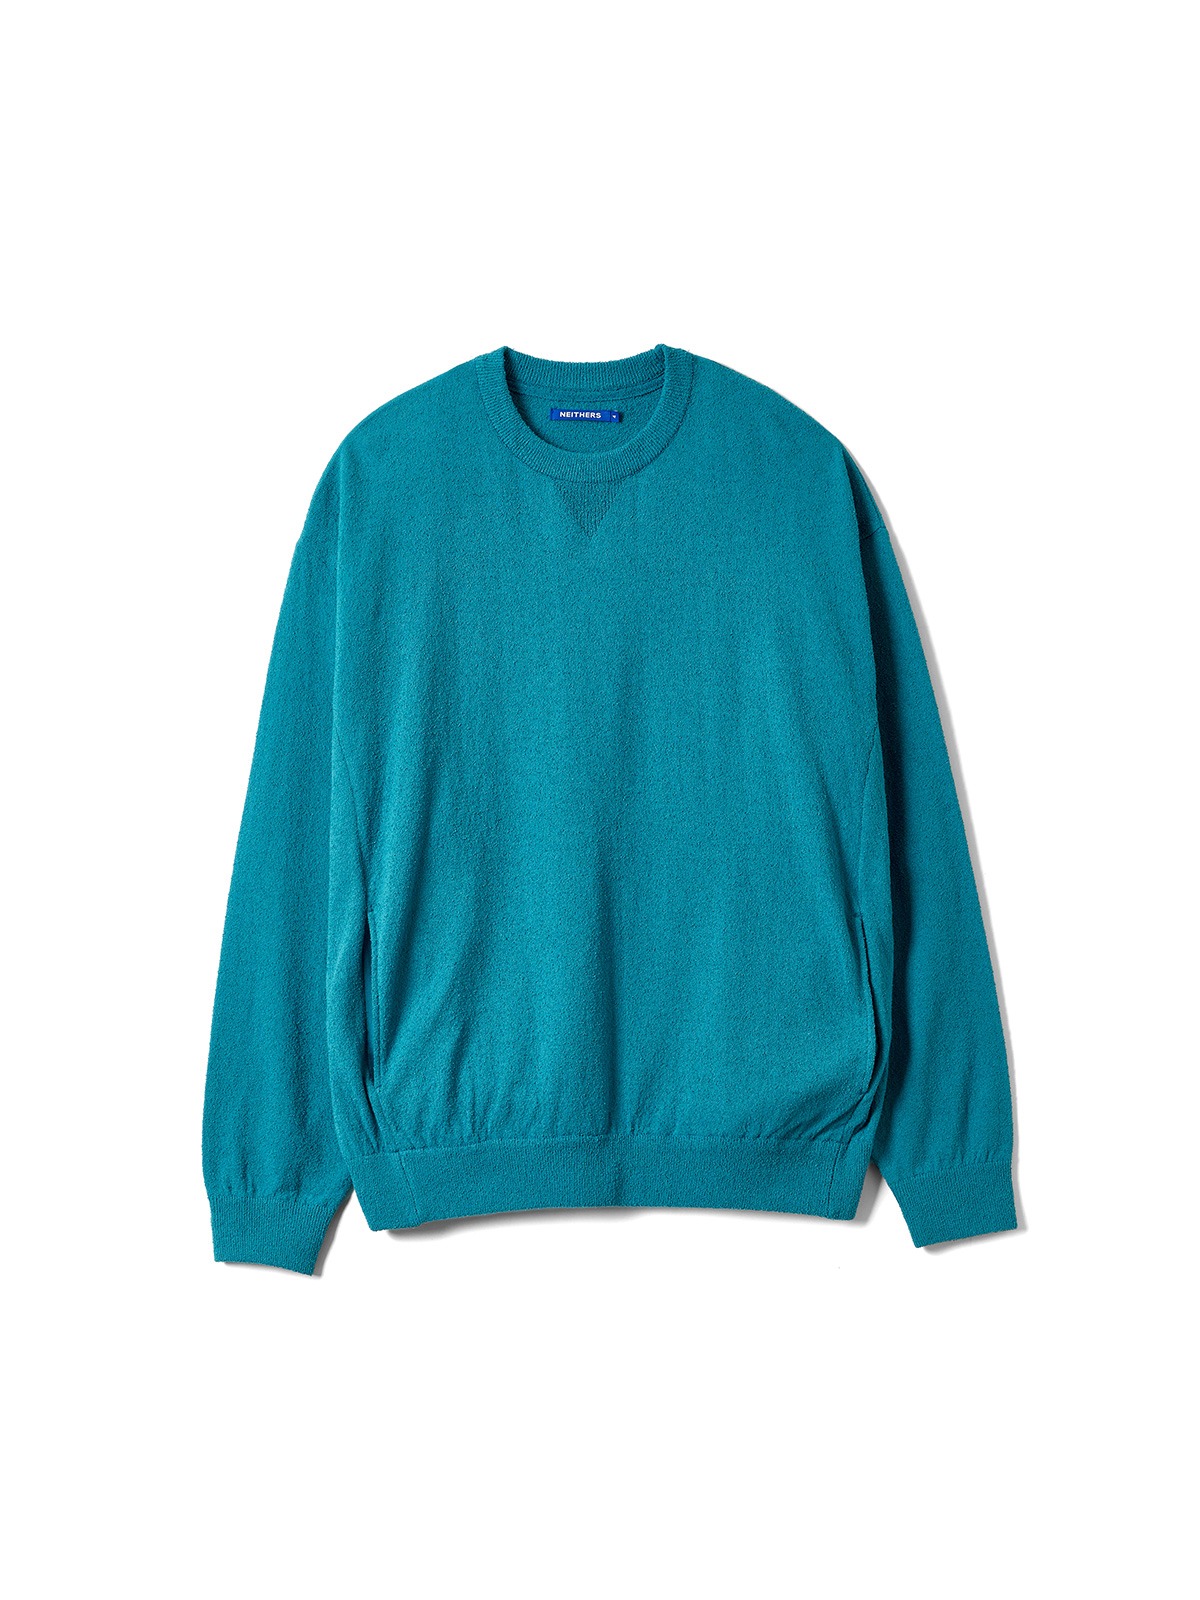 Boxer Crew Neck Sweater (Blue Green)